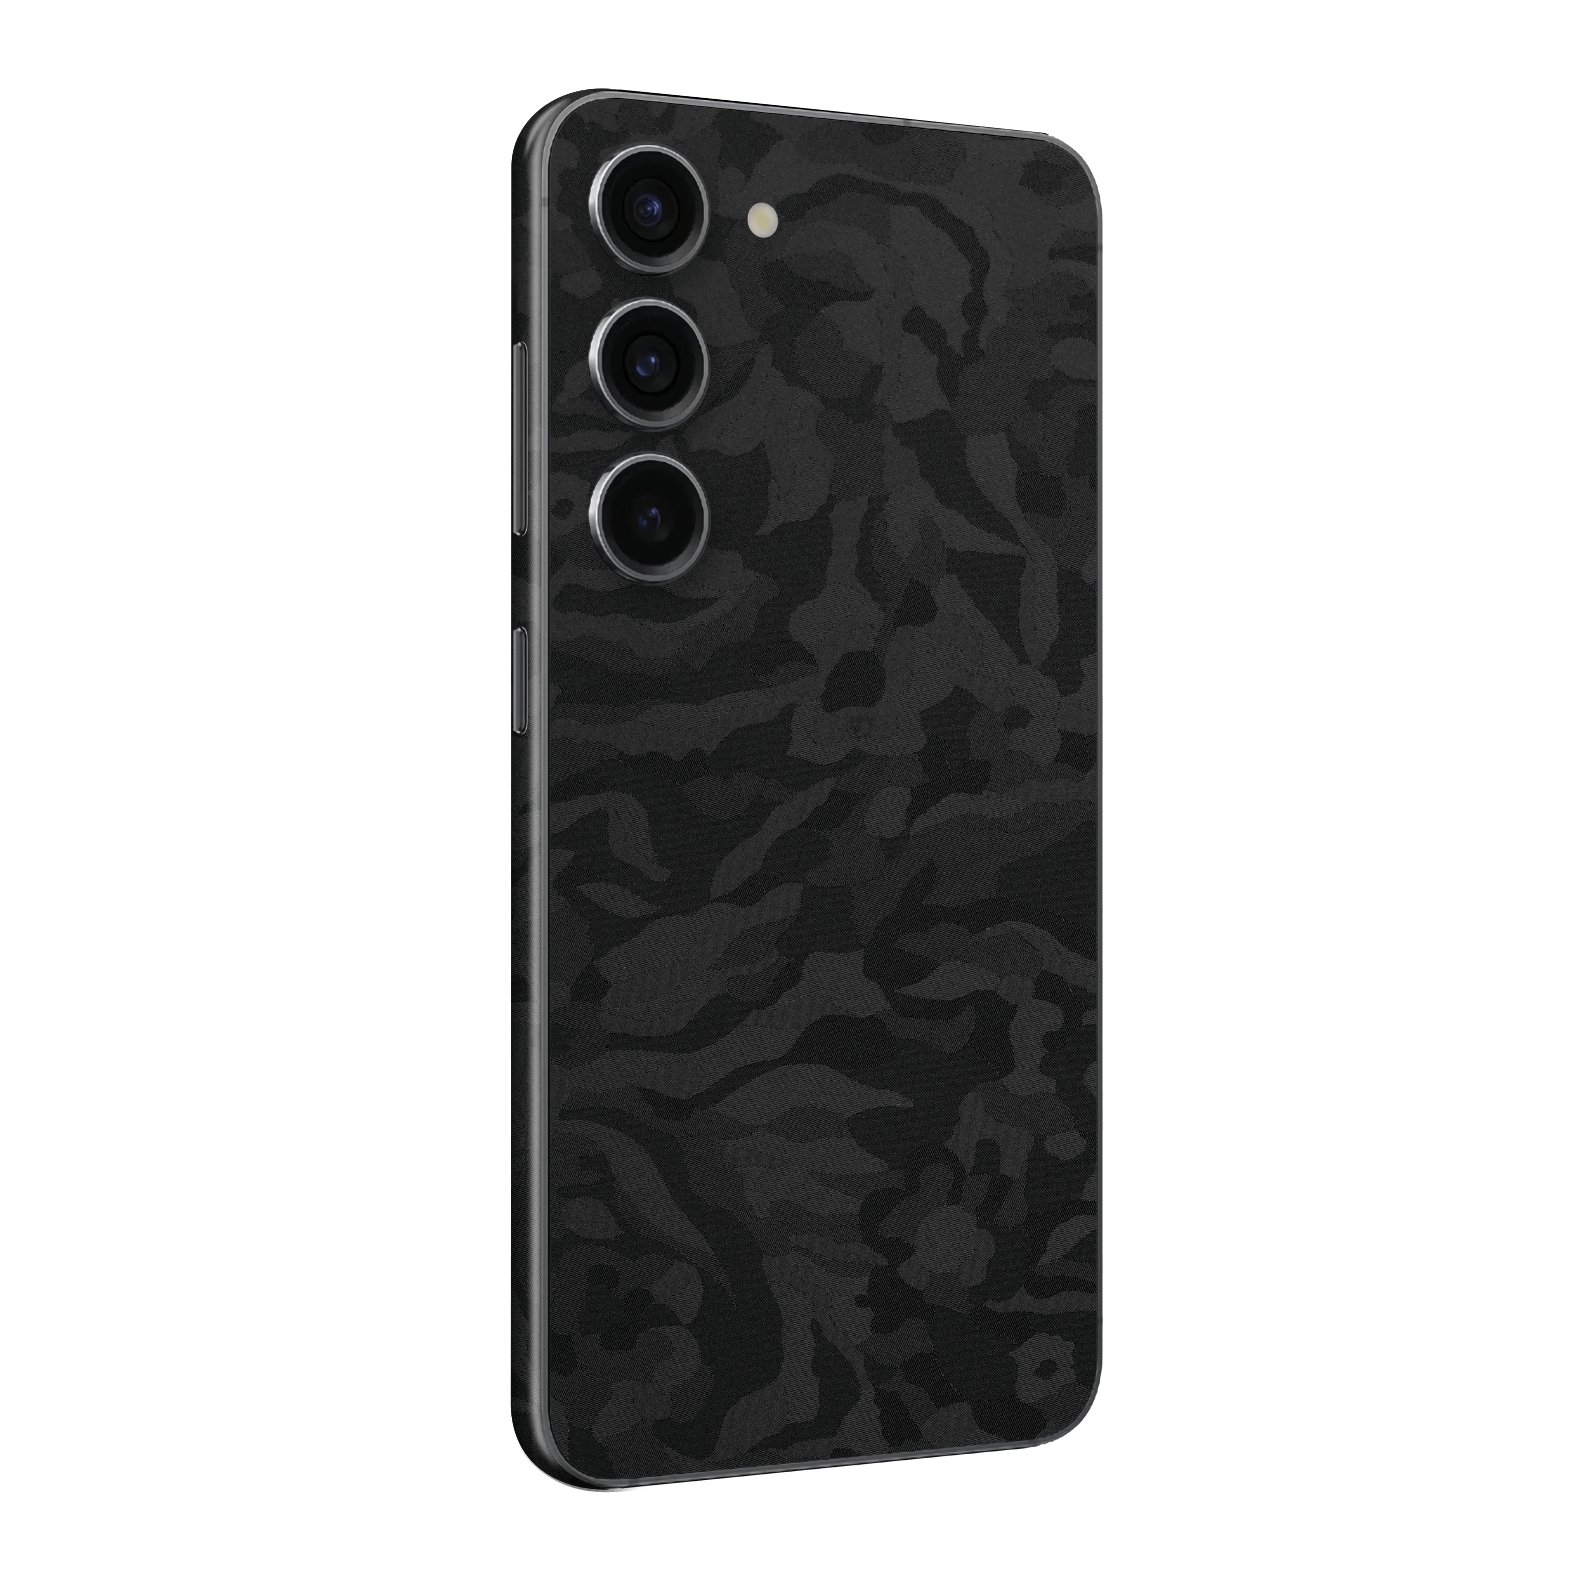 Samsung Galaxy S23+ PLUS Luxuria Black 3D Textured Camo Camouflage Skin Wrap Decal Cover Protector by EasySkinz | EasySkinz.com